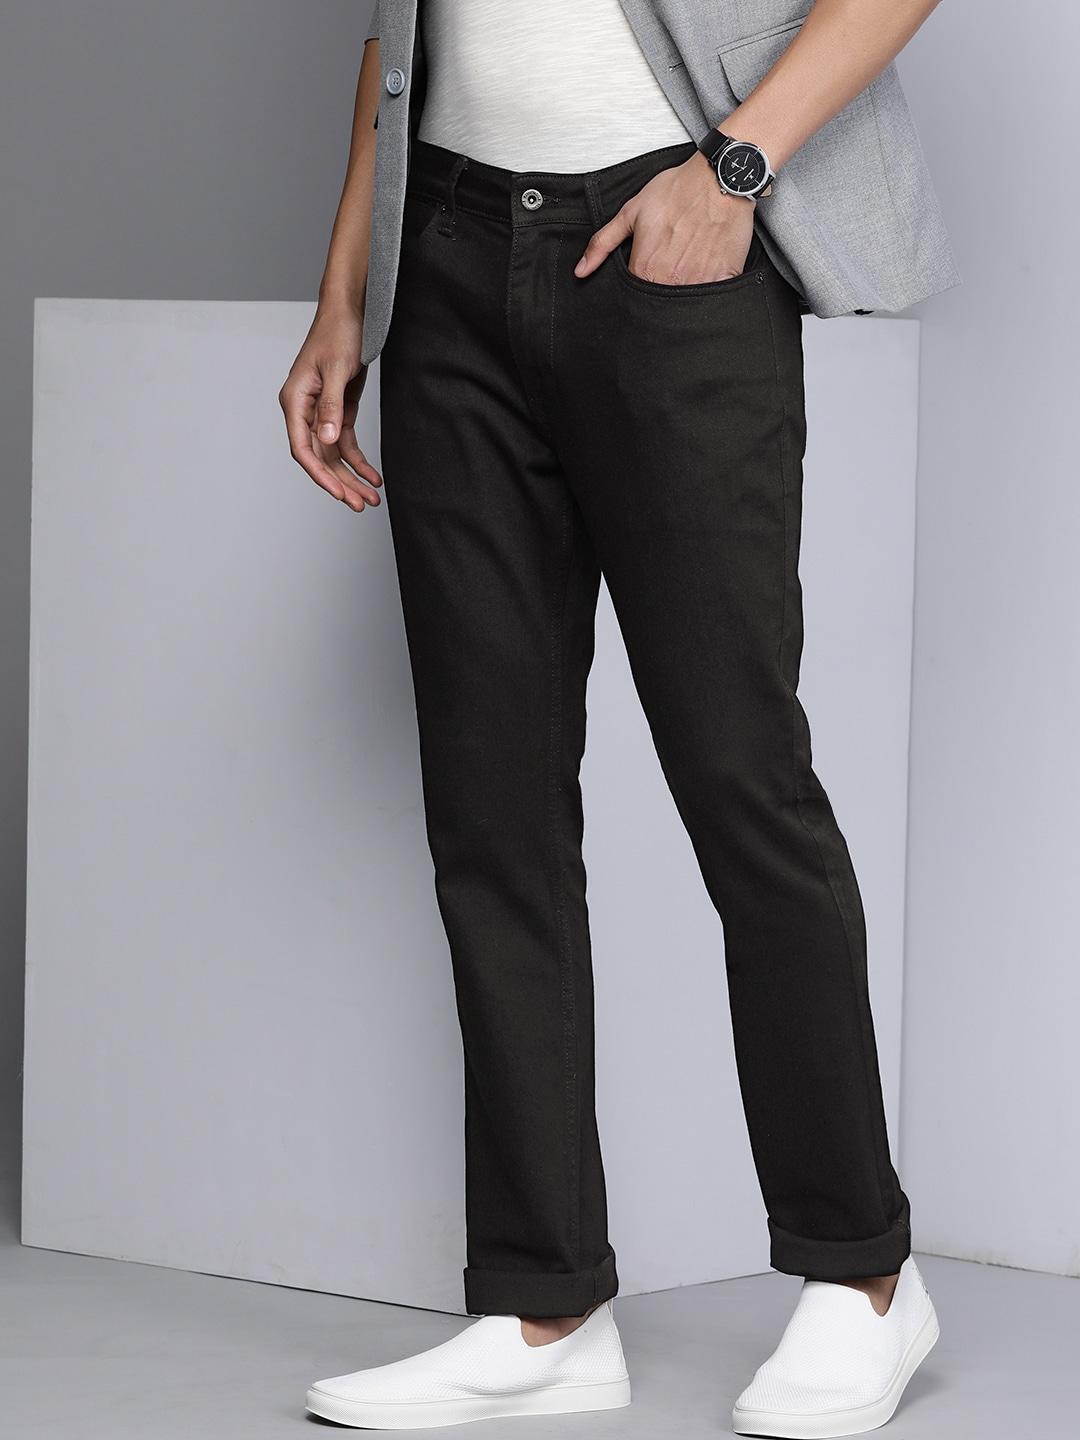 kenneth-cole-men-black-solid-slim-fit-stretchable-jeans